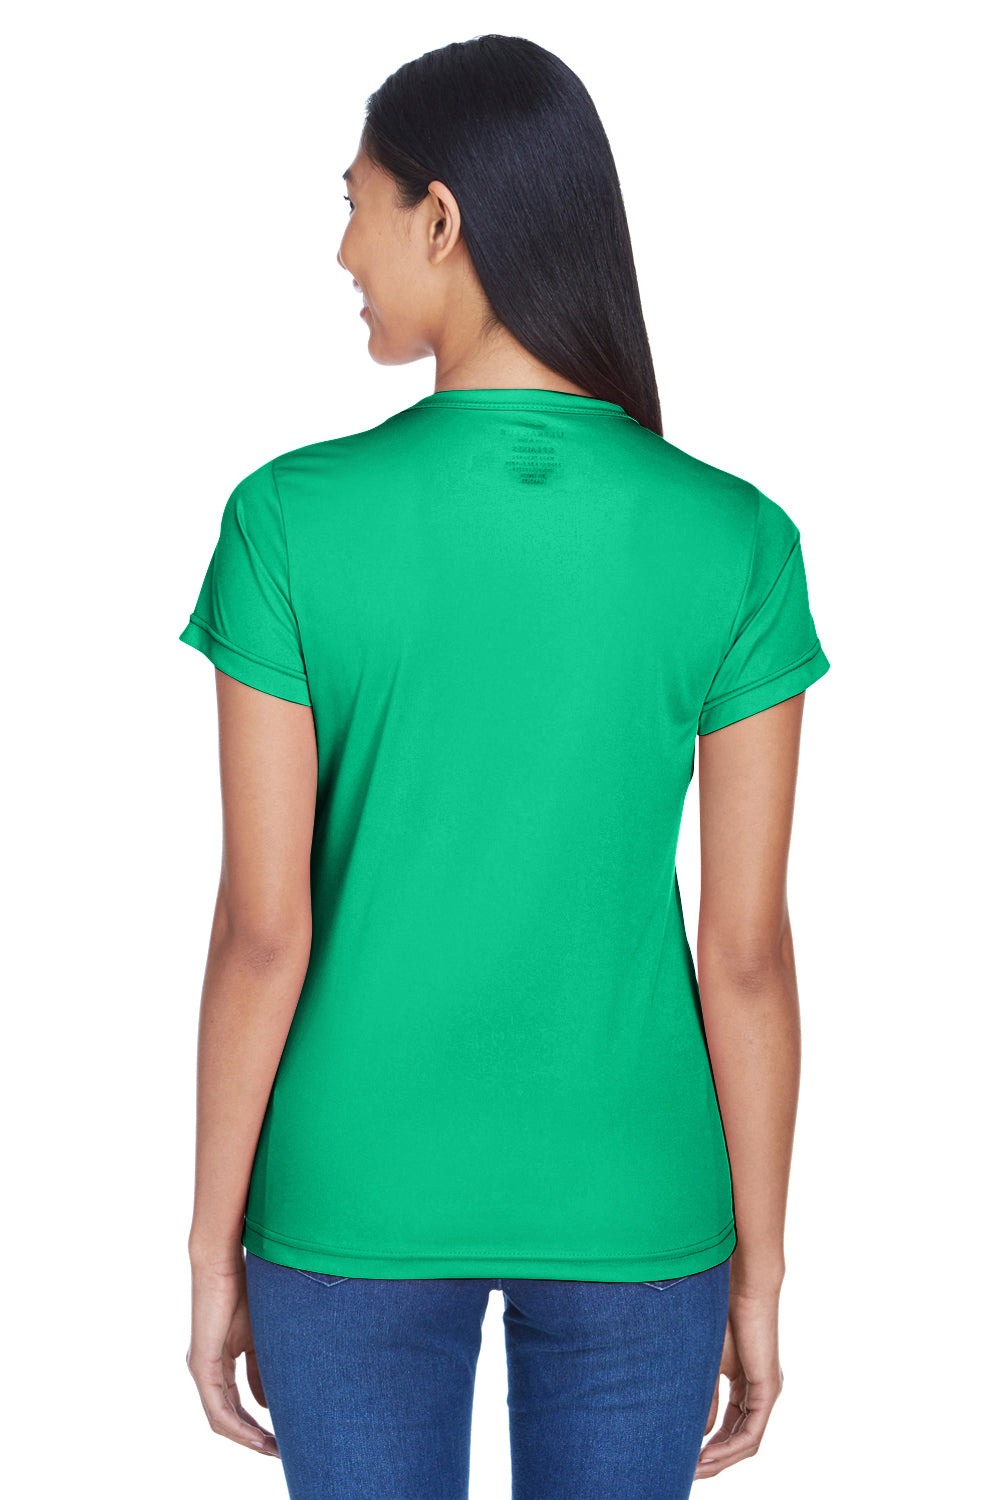 UltraClub 8420L Womens Cool & Dry Performance Moisture Wicking Short Sleeve Crewneck T-Shirt Kelly Green Back